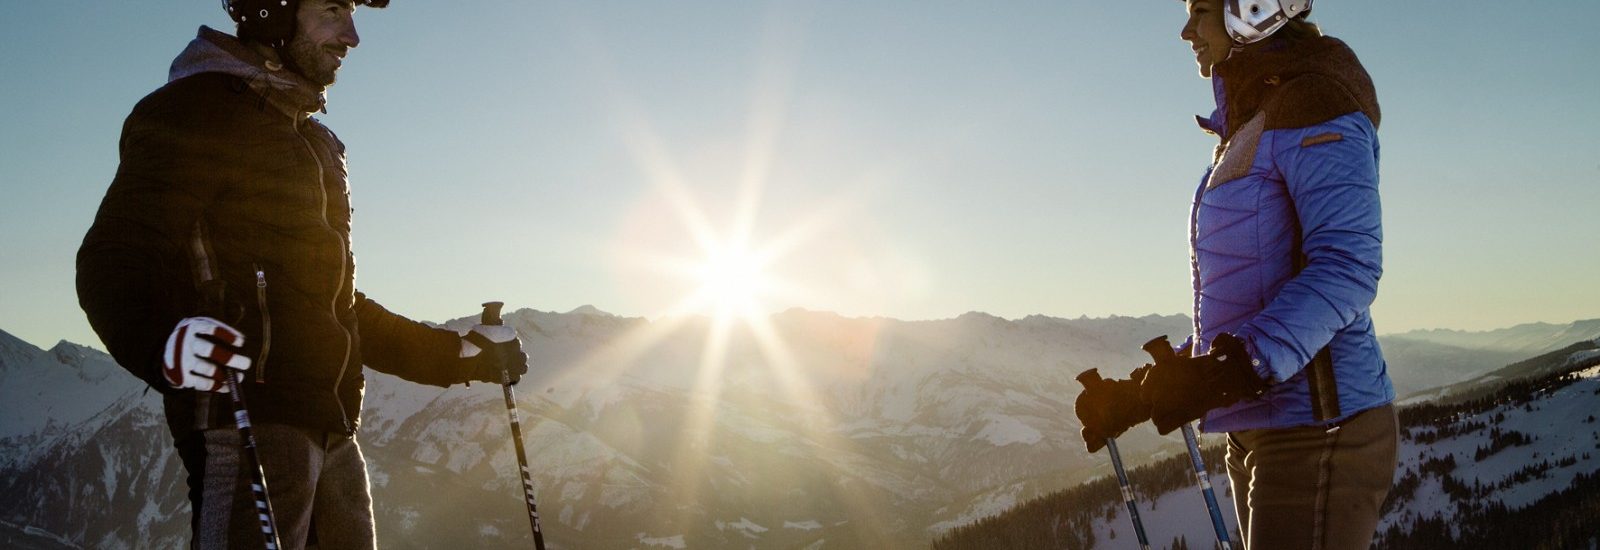 Schmitten_Ski'n'Brunch Sunrise2_©Schmittenhöhebahn